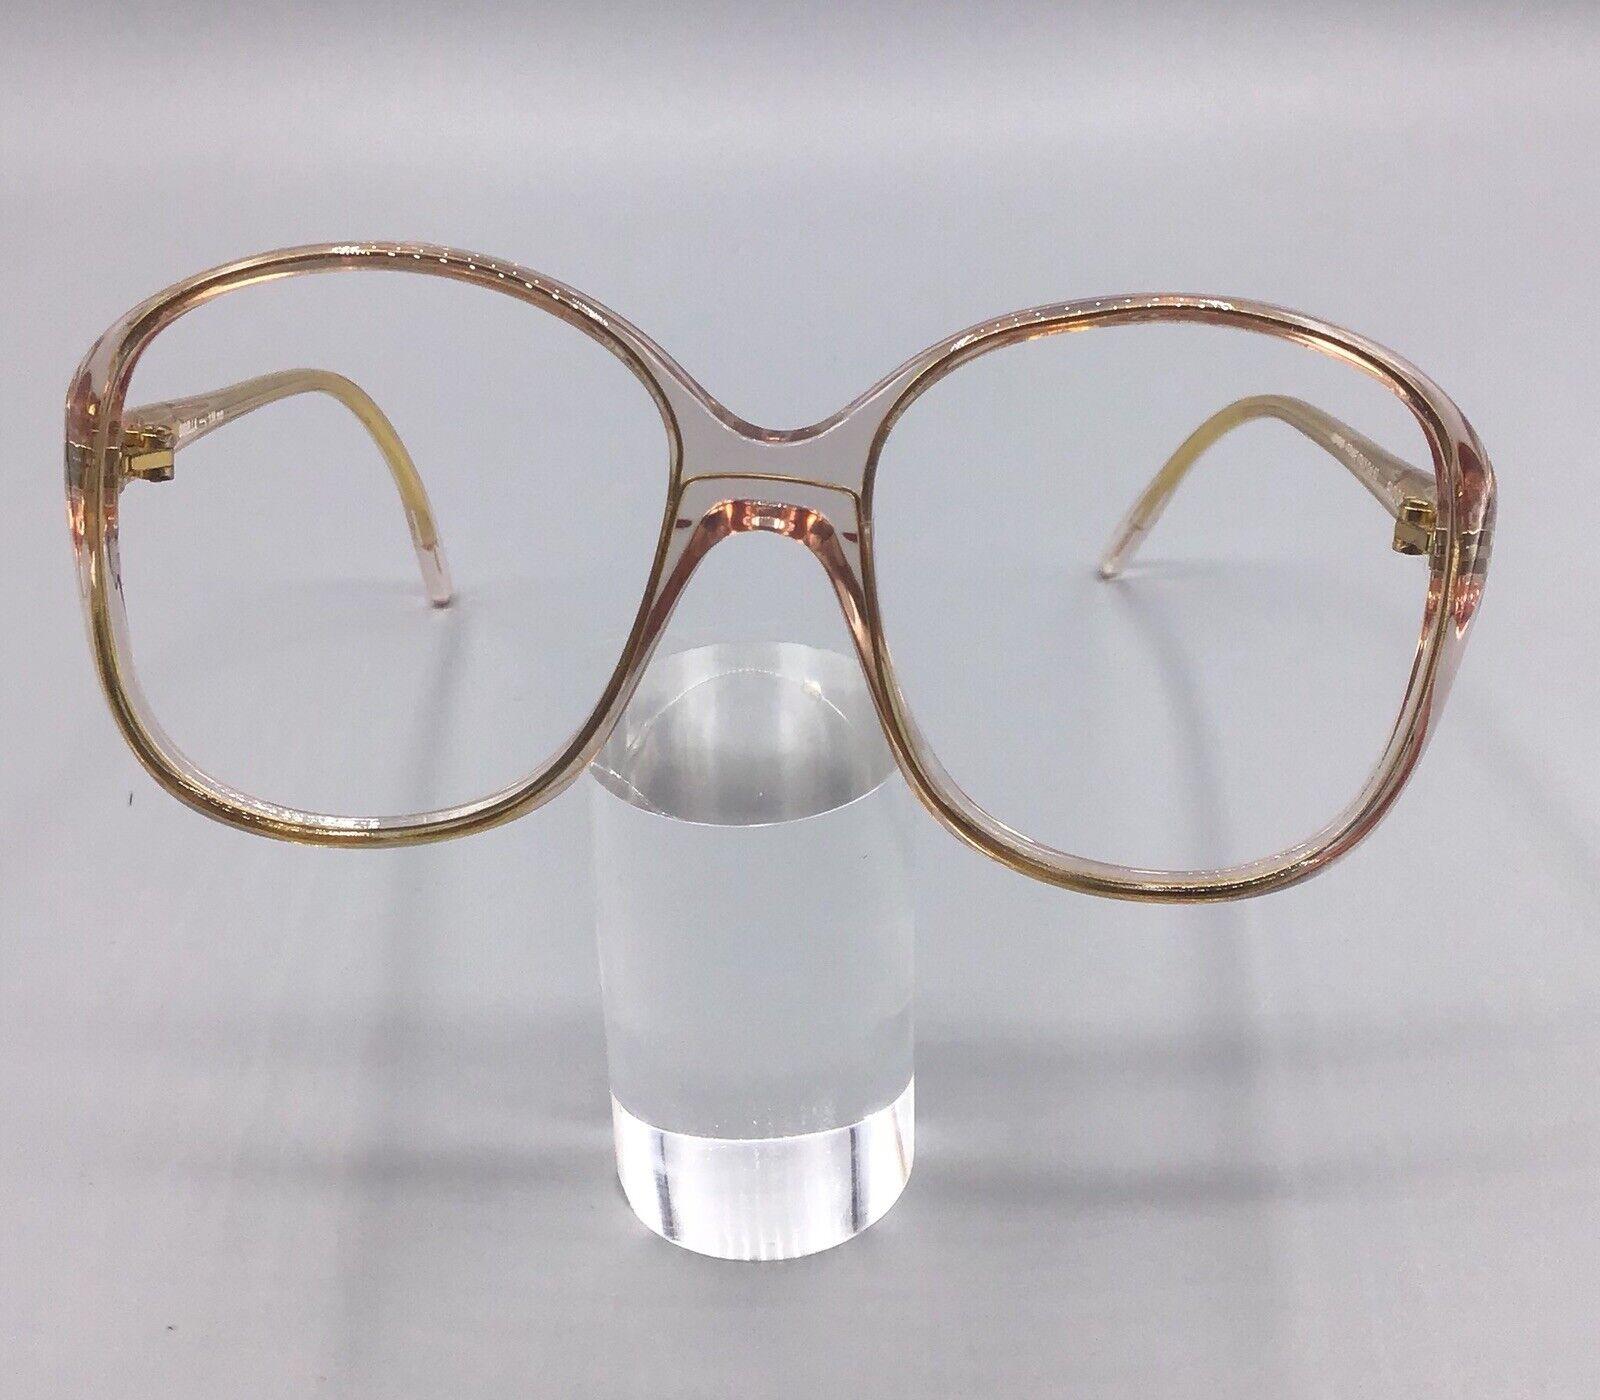 Morwen occhiale vintage eyewear frame italy col. 62 FILO DE ORO model GISELLA